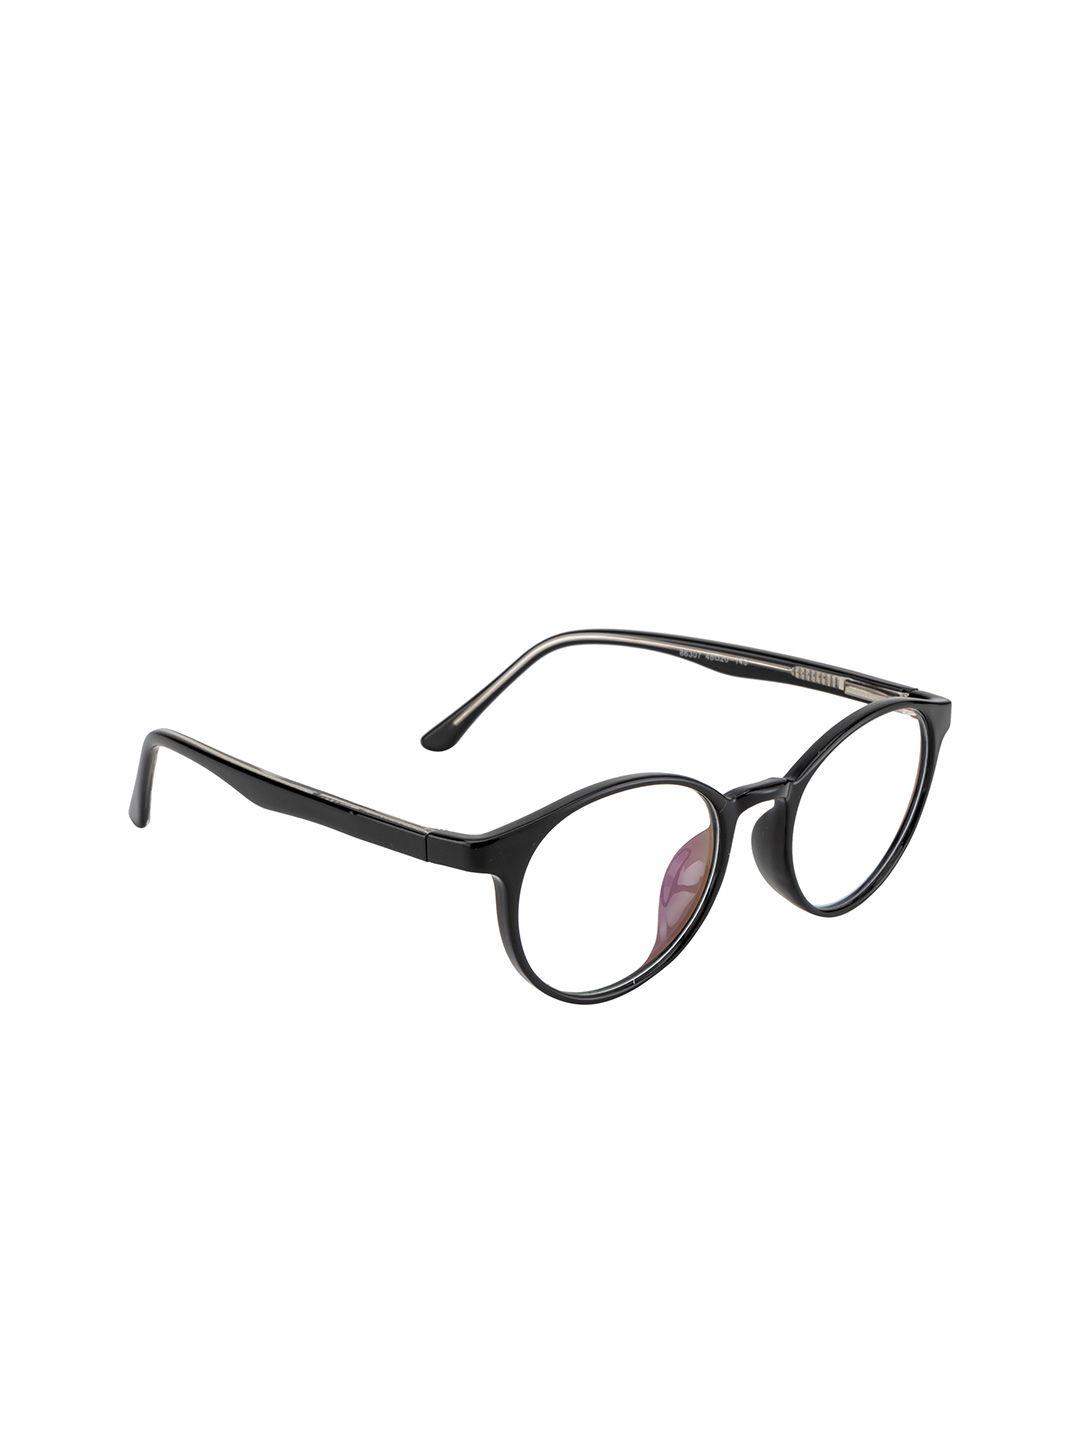 ted smith unisex black full rim round frames eyeglasses